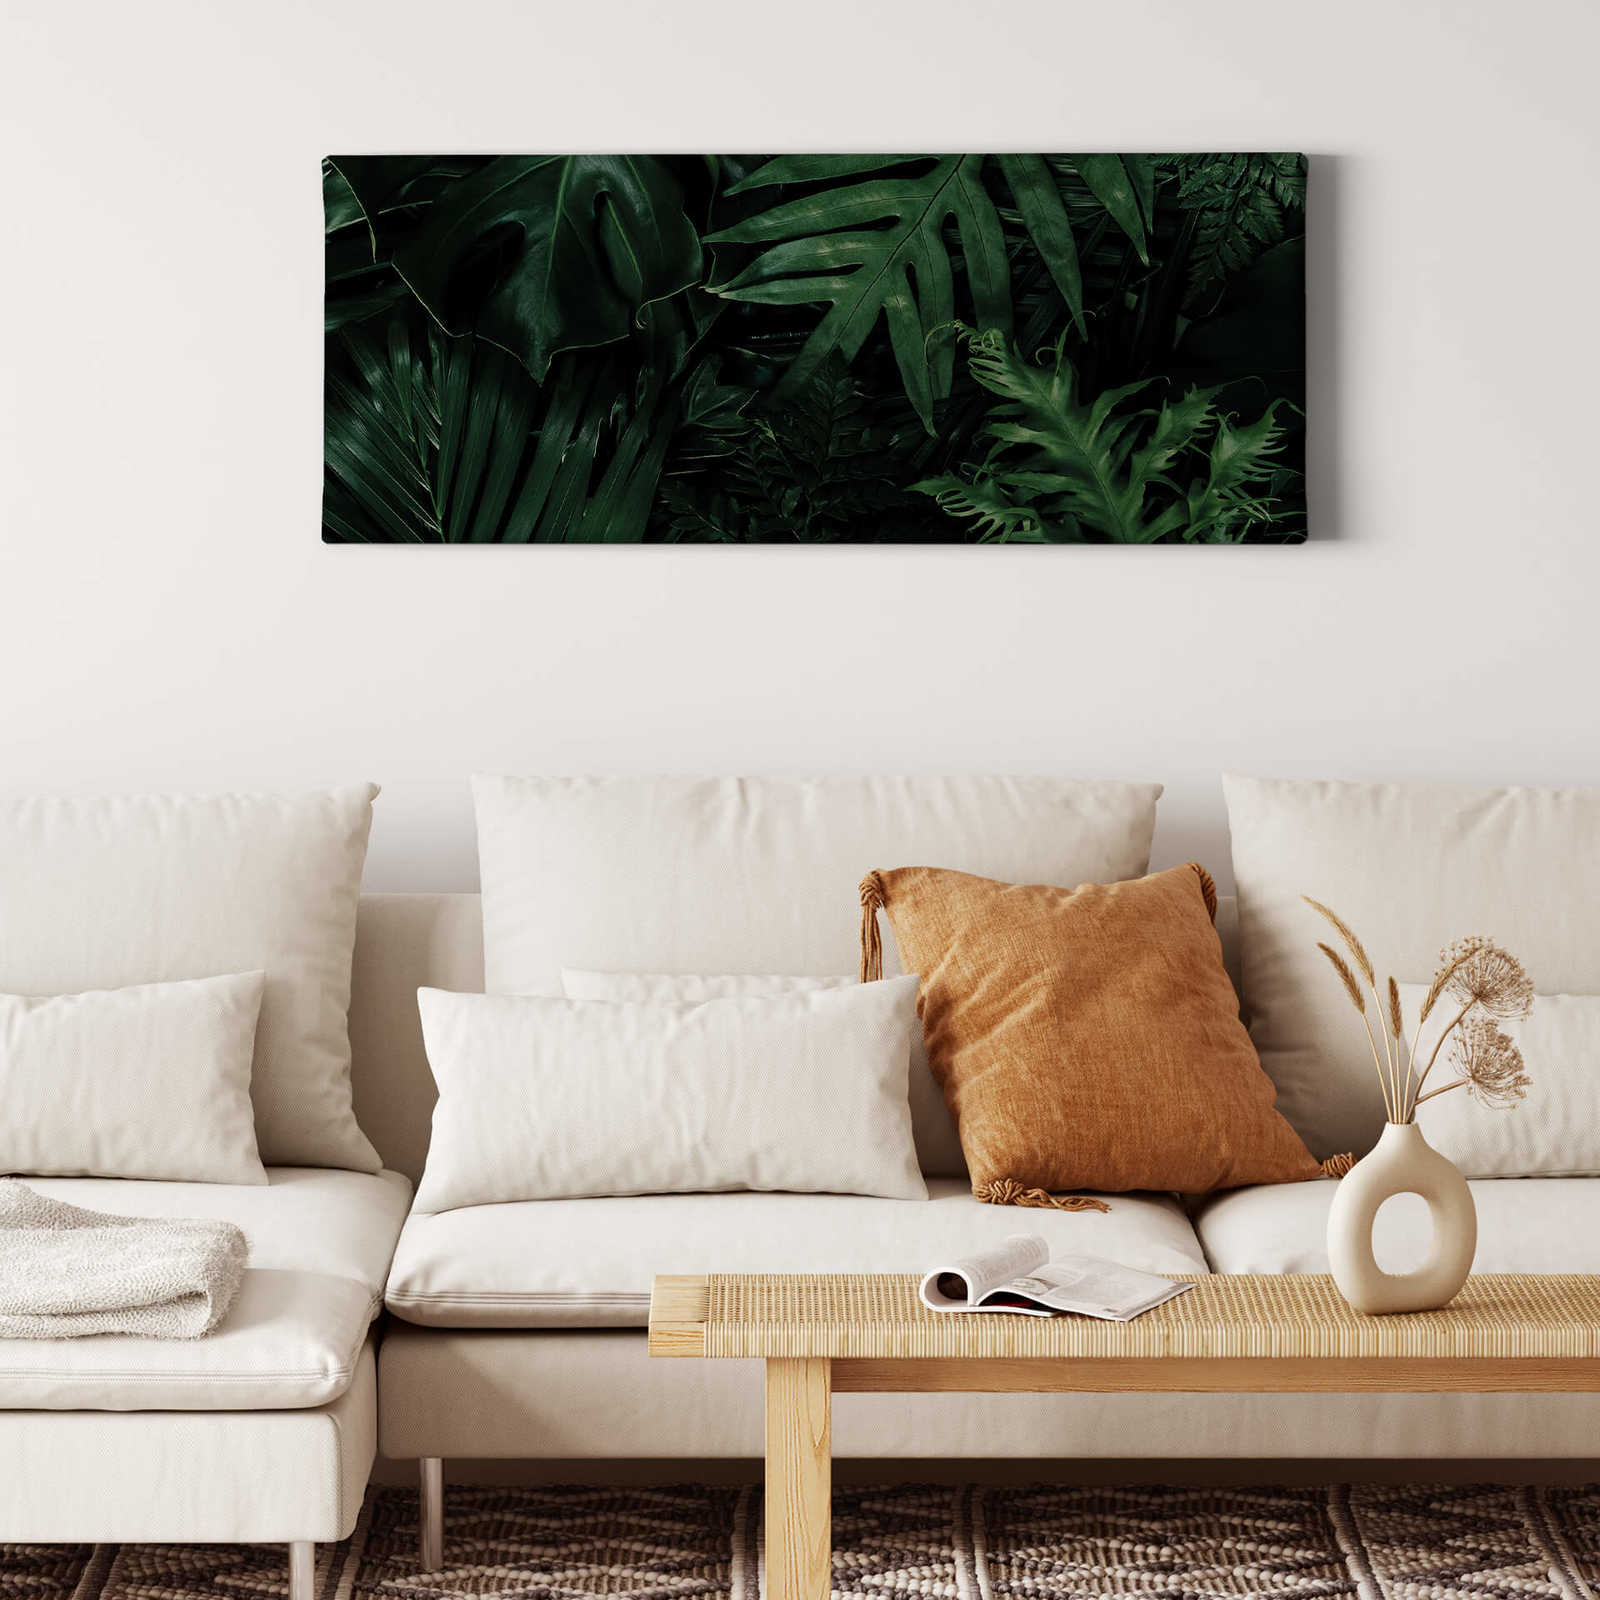             Panorama canvas print green leaves, jungle design
        